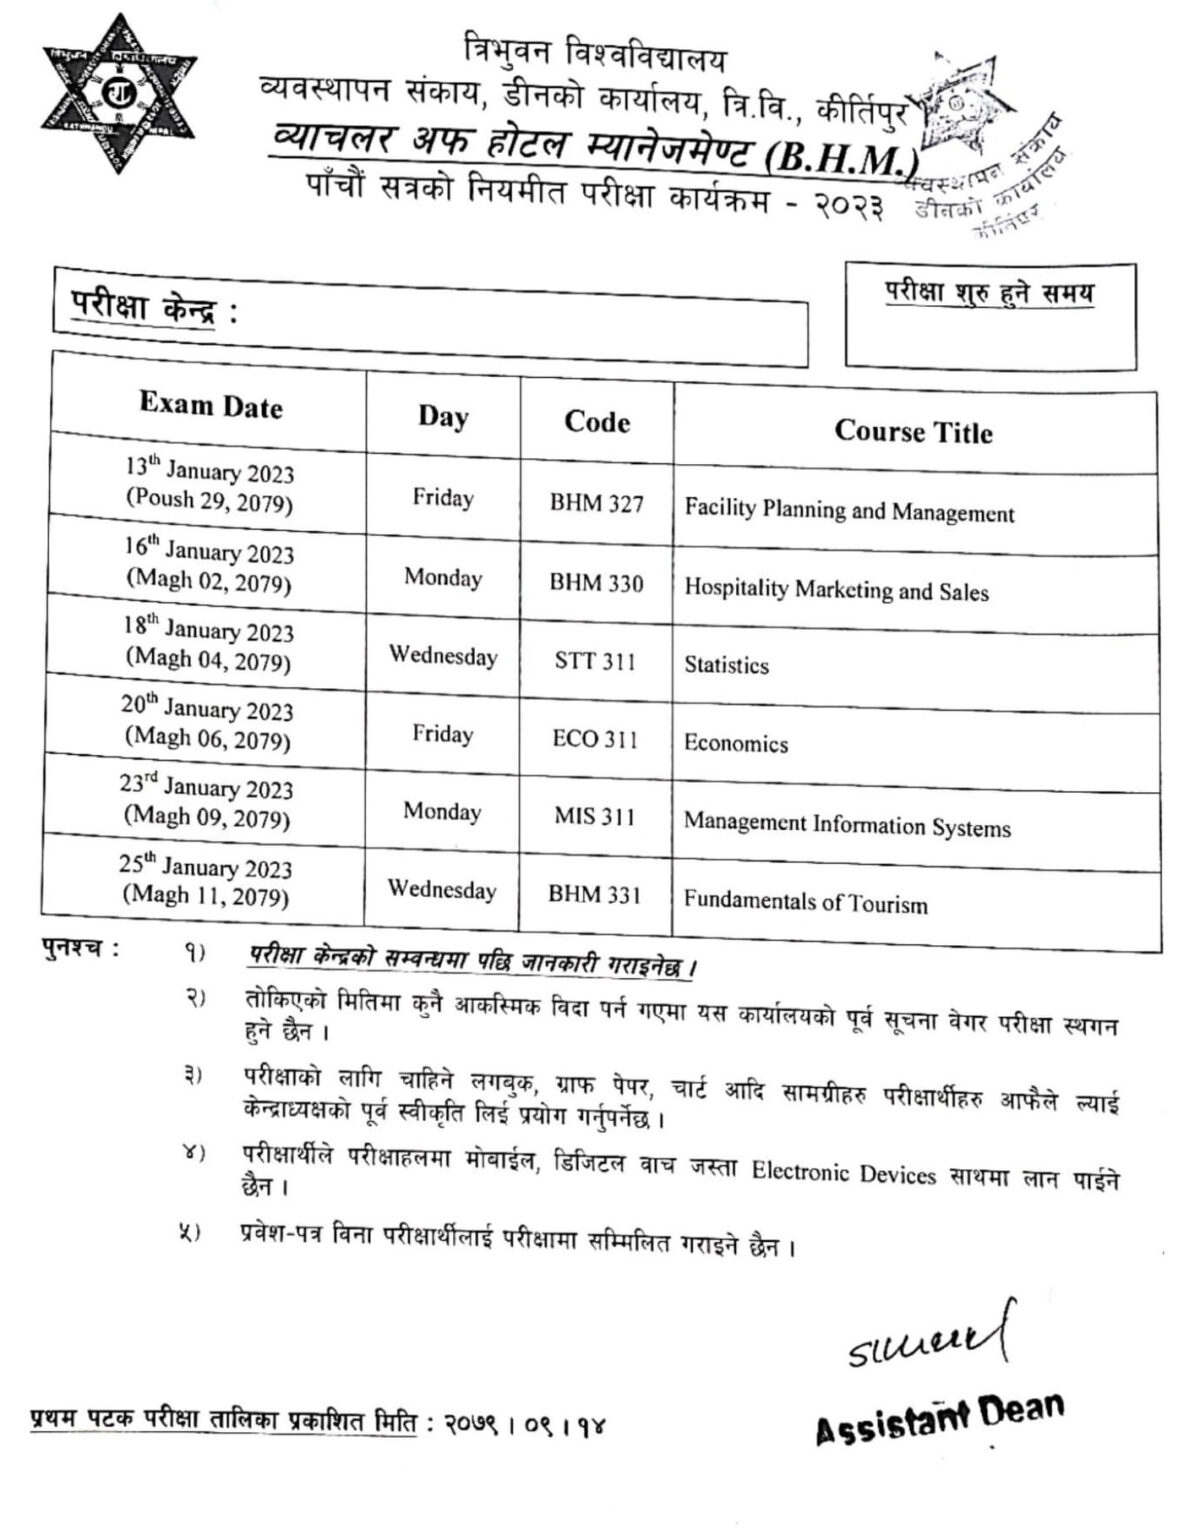 Tribhuvan University has published BHM 5th semester 2023 exam schedule